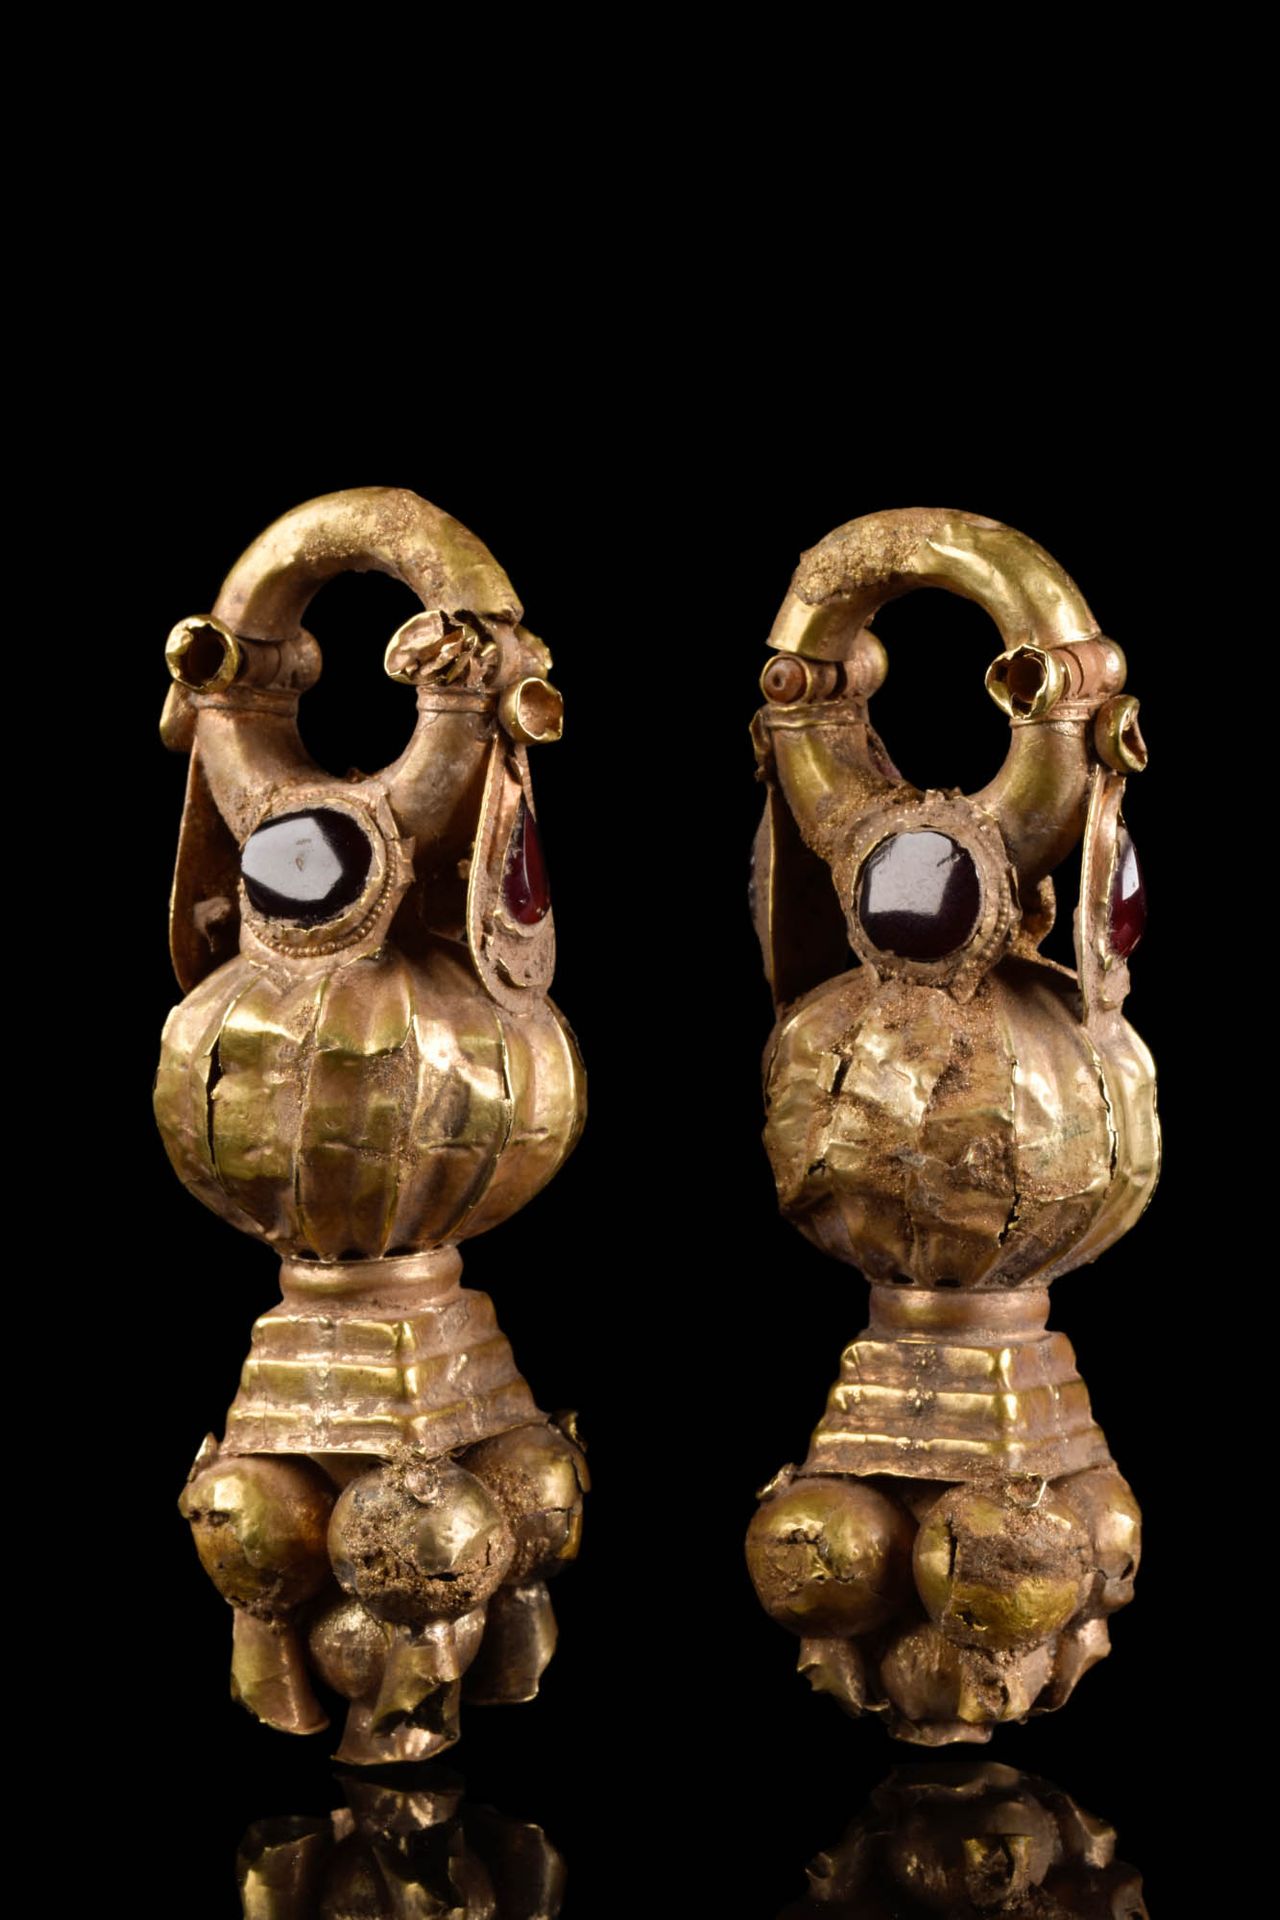 HELLENISTIC MATCHED PAIR OF GOLD EARRINGS 约公元前 400 - 300 年。约公元前 400 - 300 年。
这对金&hellip;